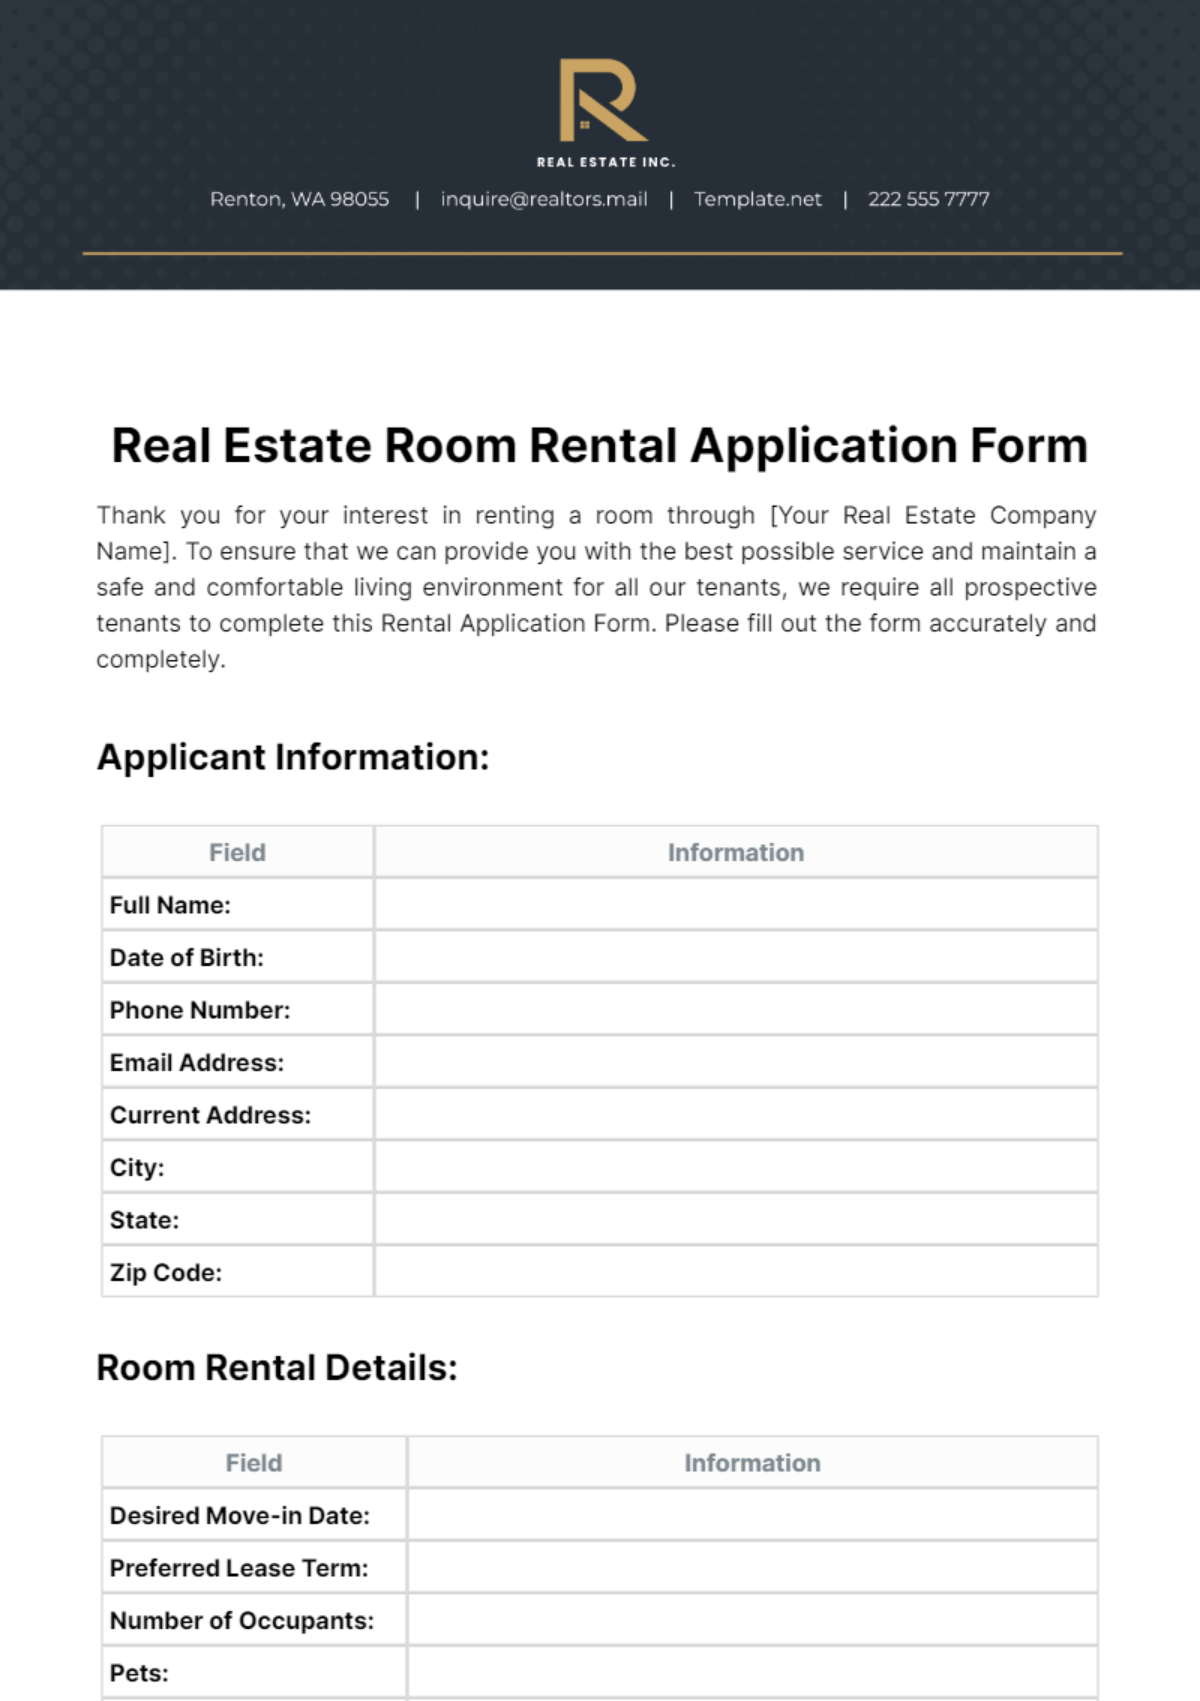 Real Estate Room Rental Application Form Template